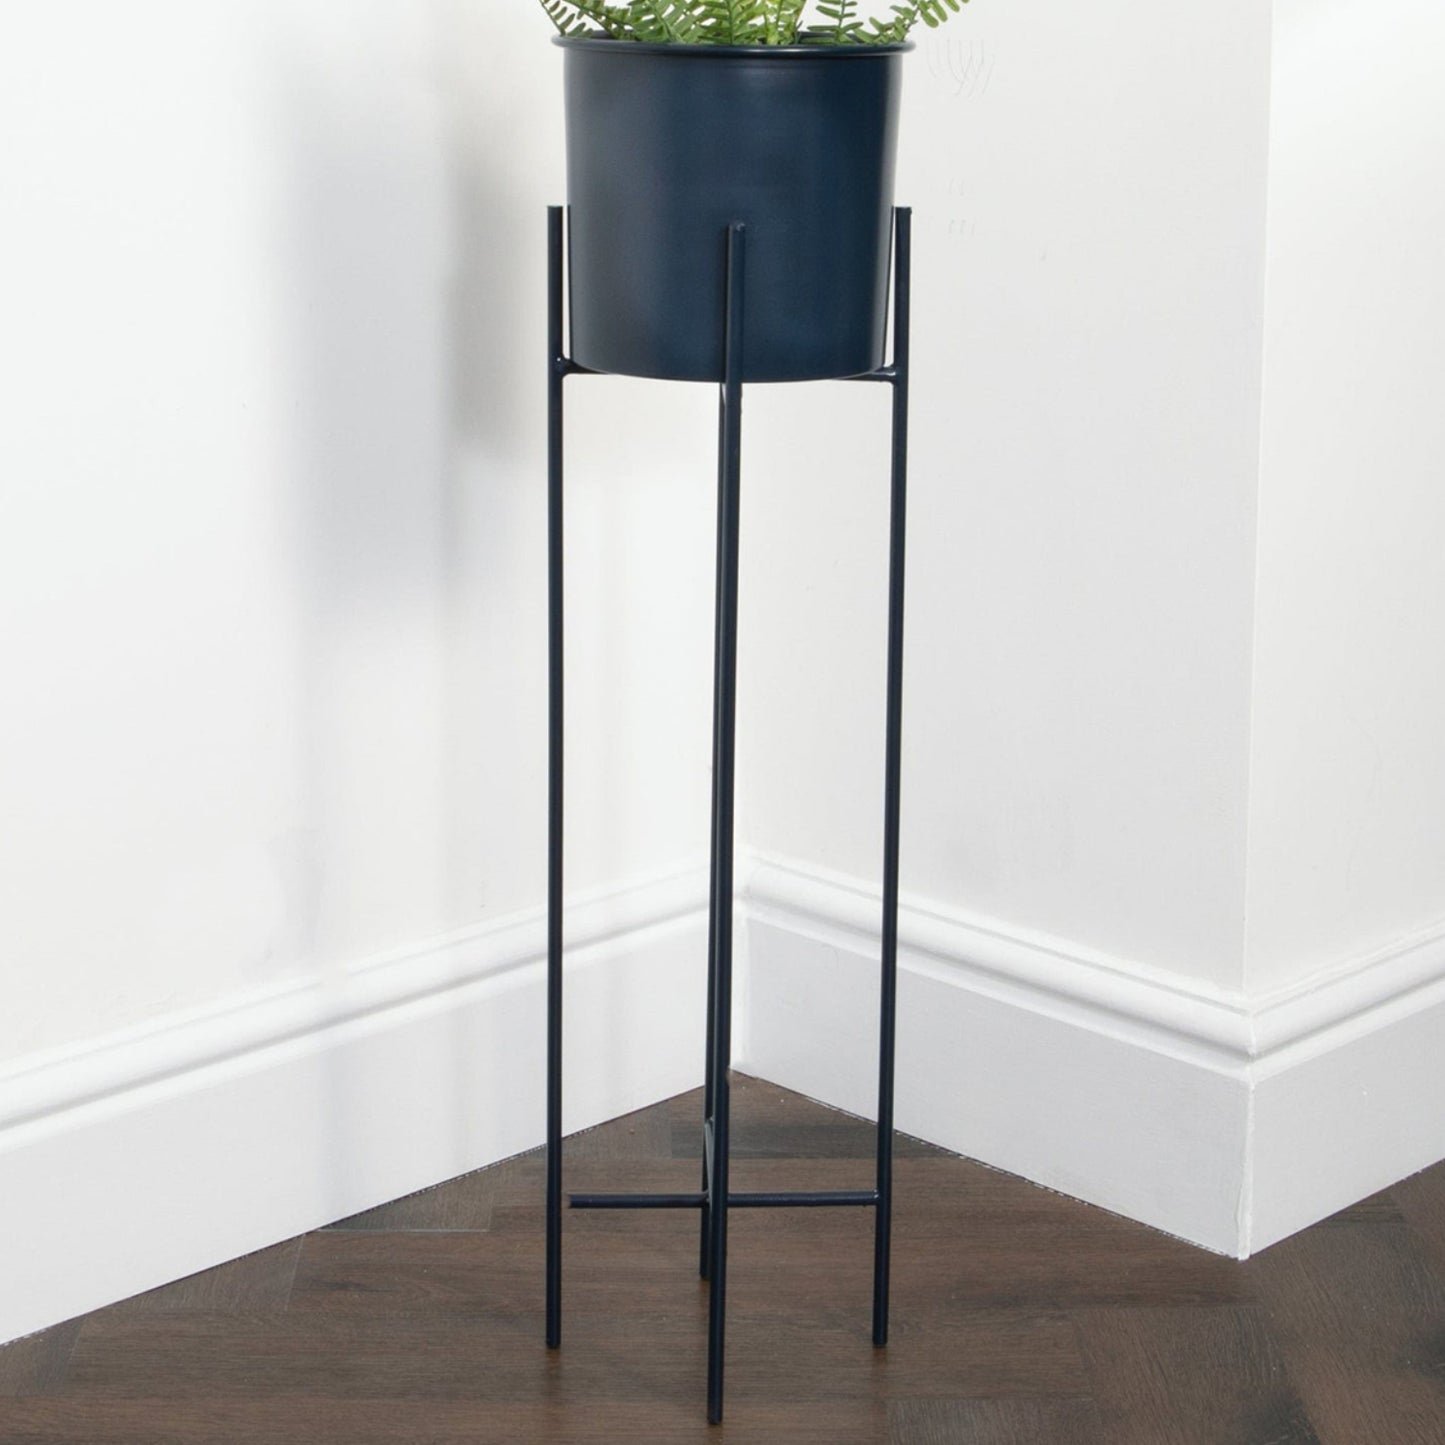 Stilts navy blue plant holder 83cm by Native